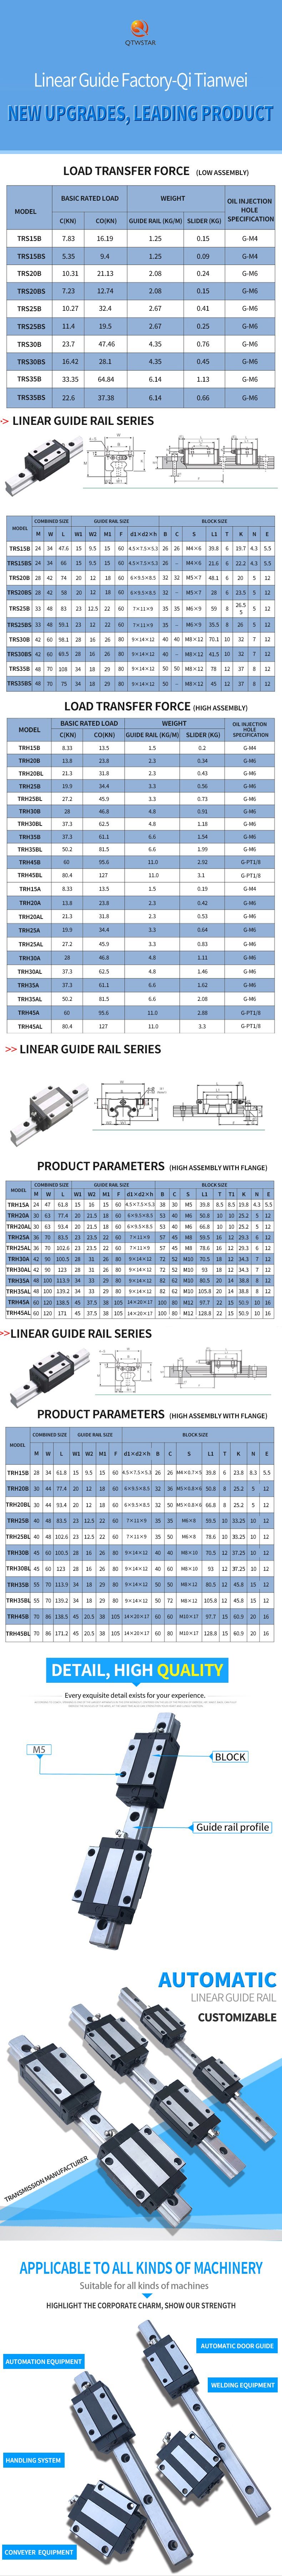 Guide Rail Design, Machine Tool Guide Rail Protective Cover, Rolling Guide Rail, Guide Rail Installation